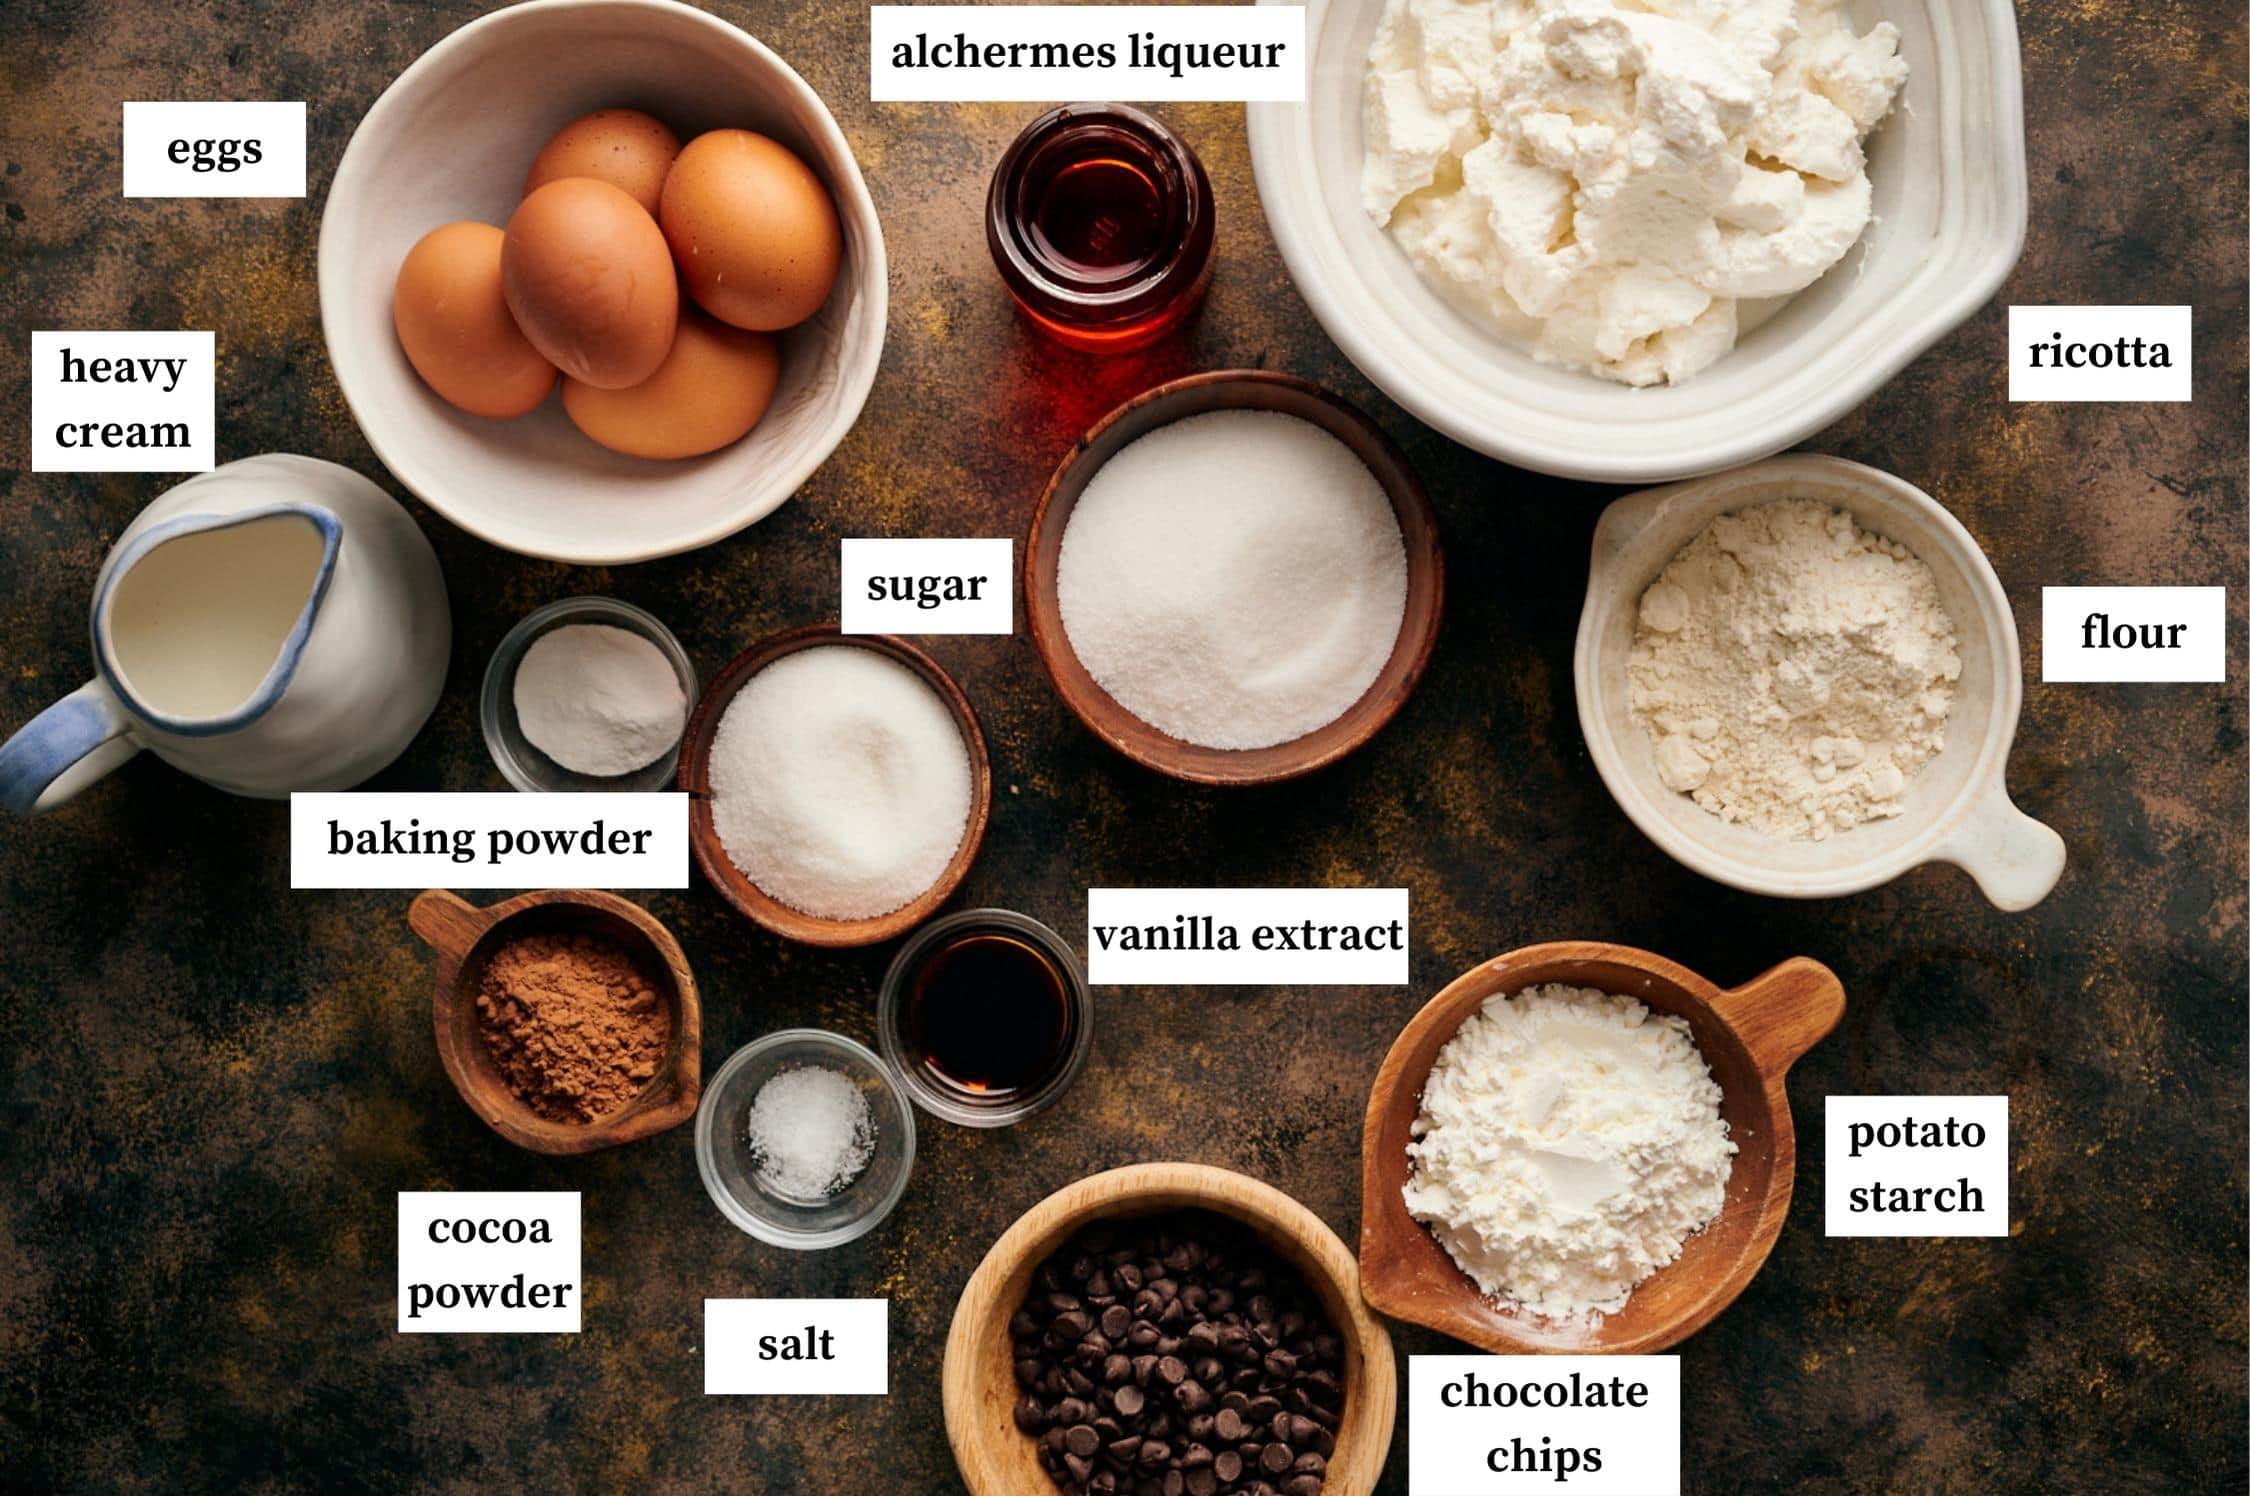 ingredients of zuccotto: bowls of eggs, sugar, baking powder, potato starch, etc.